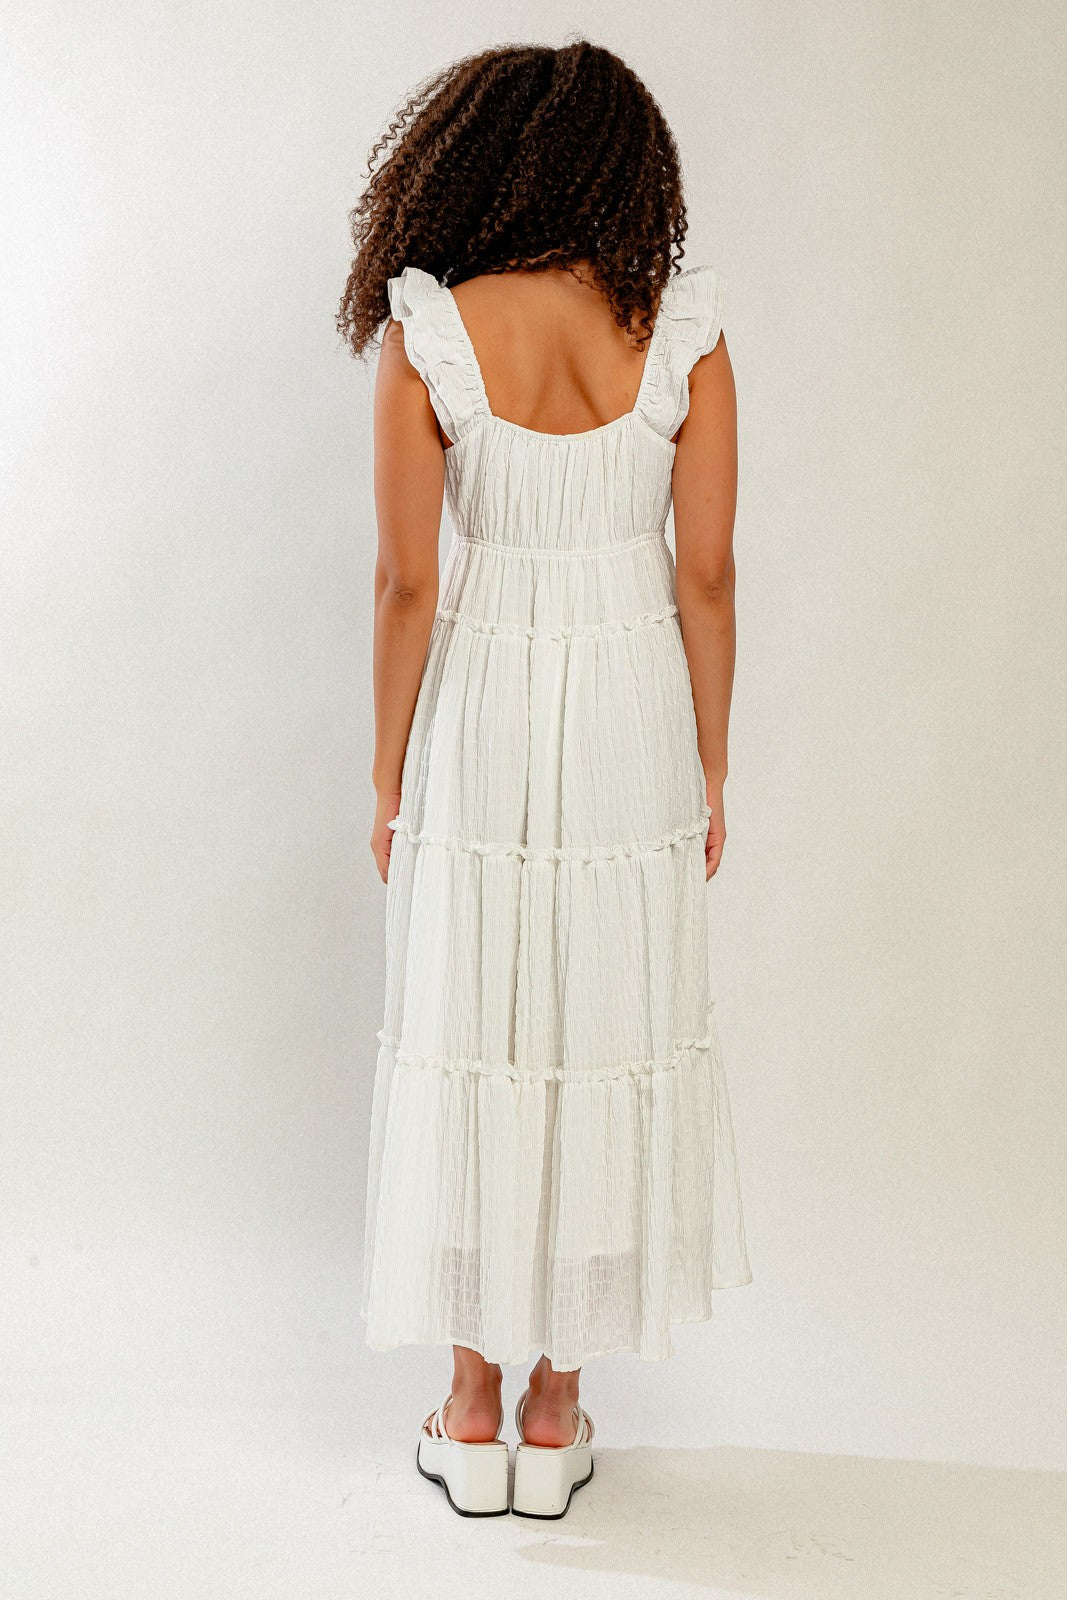 Women's white maxi dress